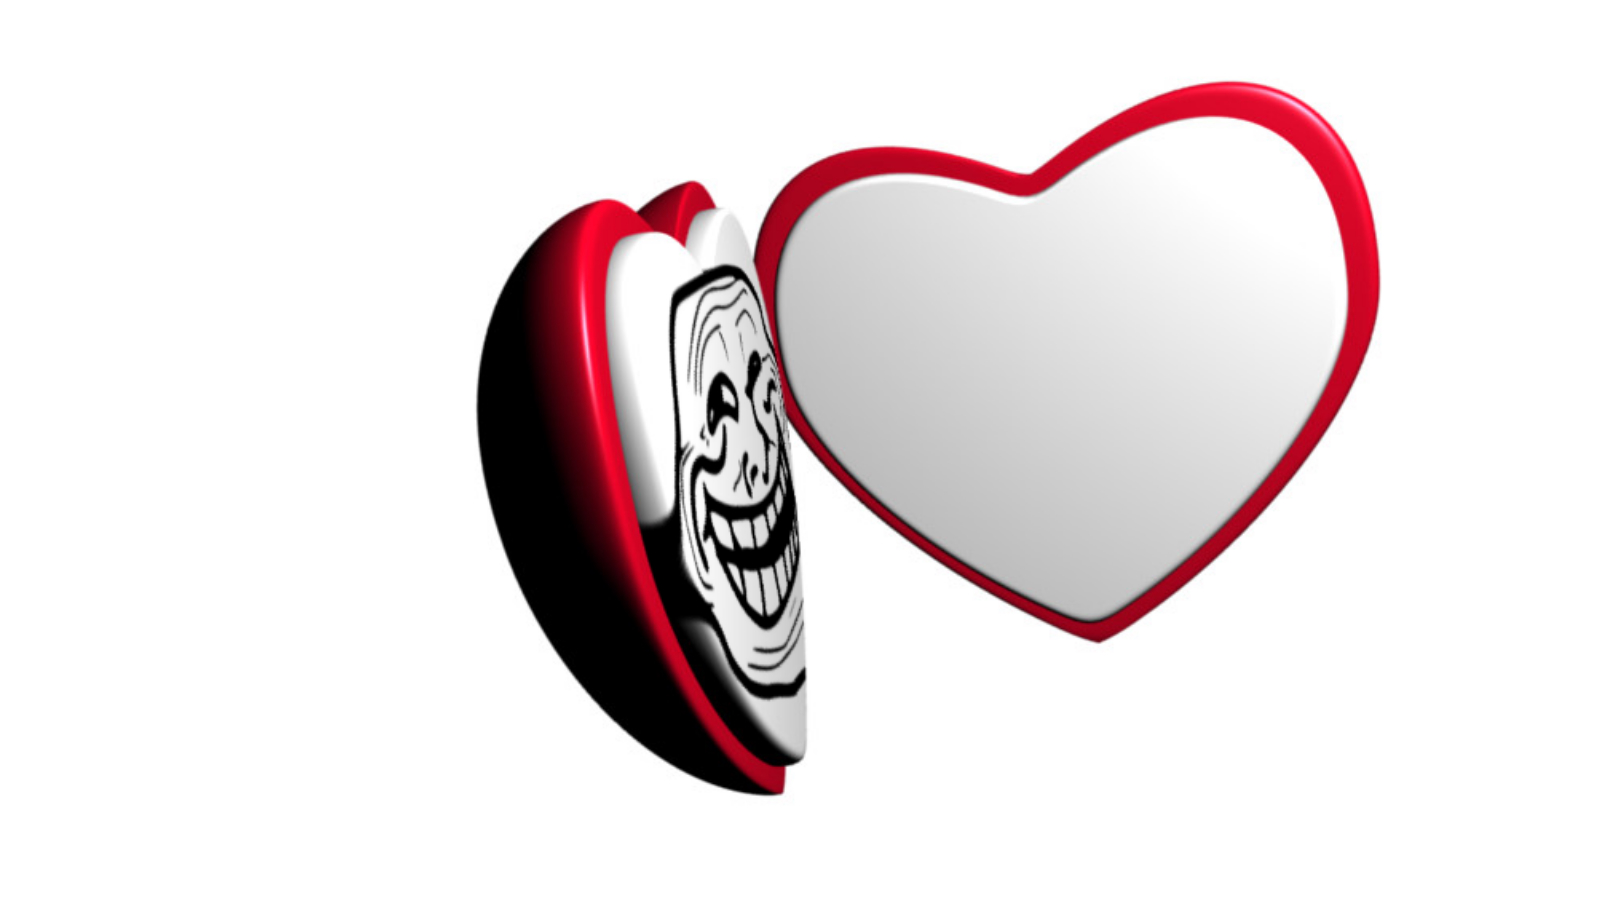 How To Create An Animated Heart Shaped Logo